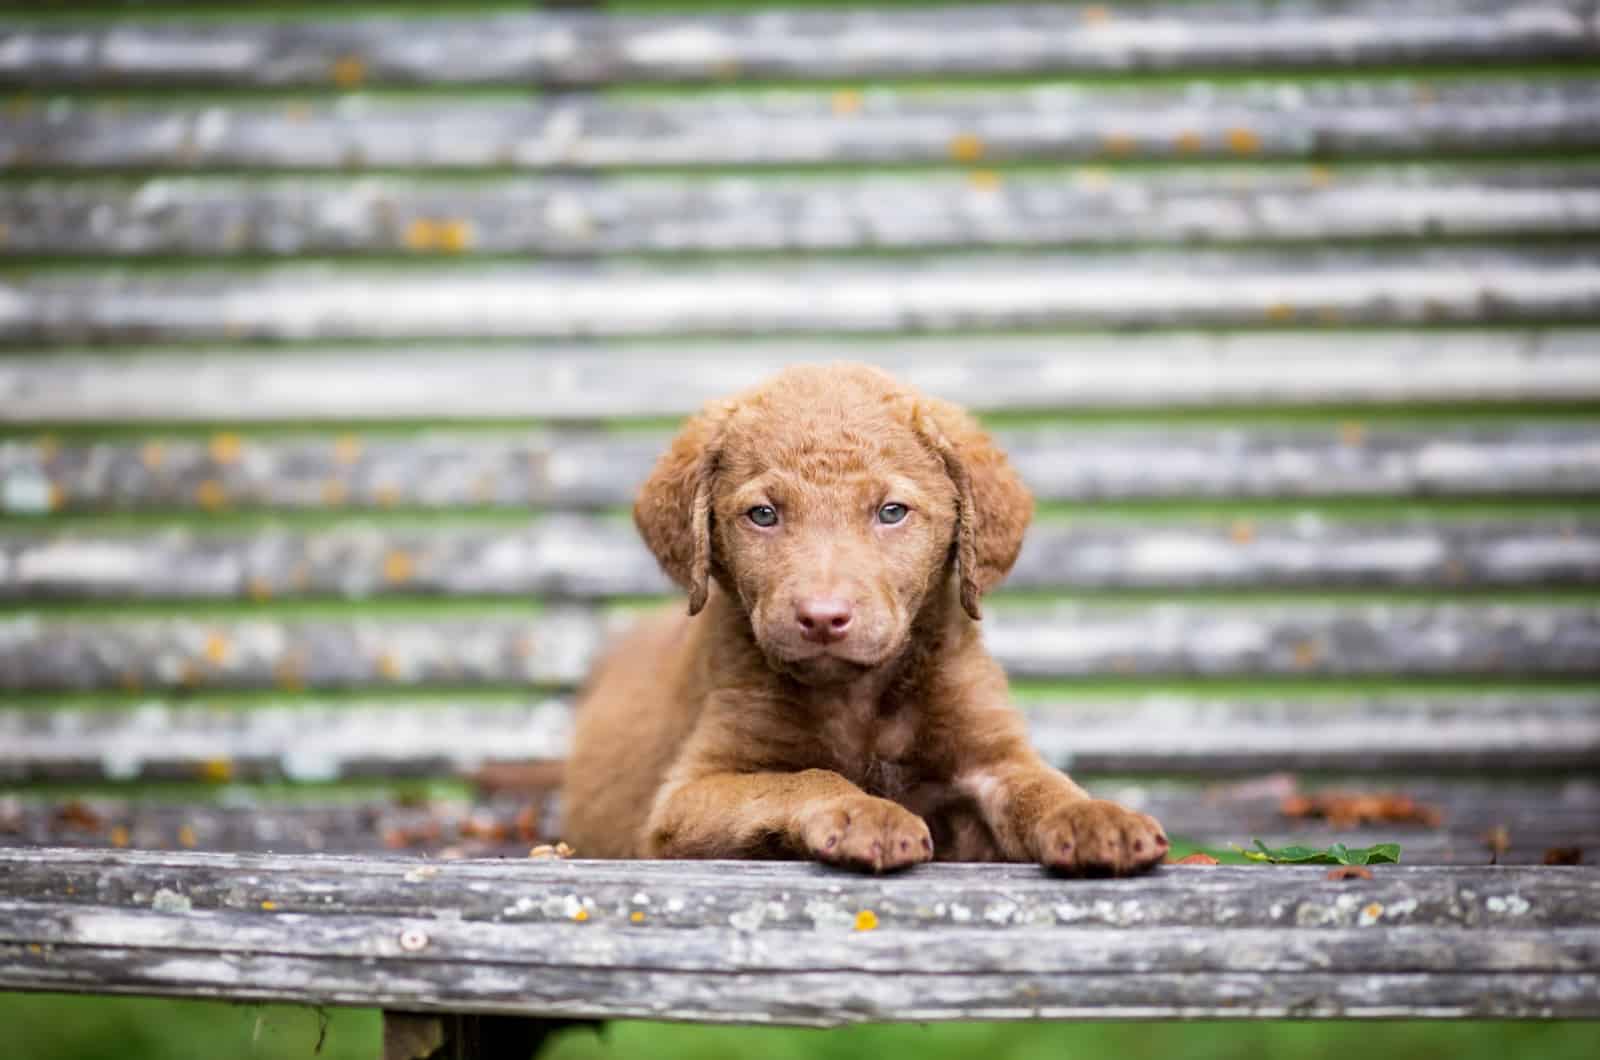 Chesapeake Bay Retrievers puppy lies on a wooden bench